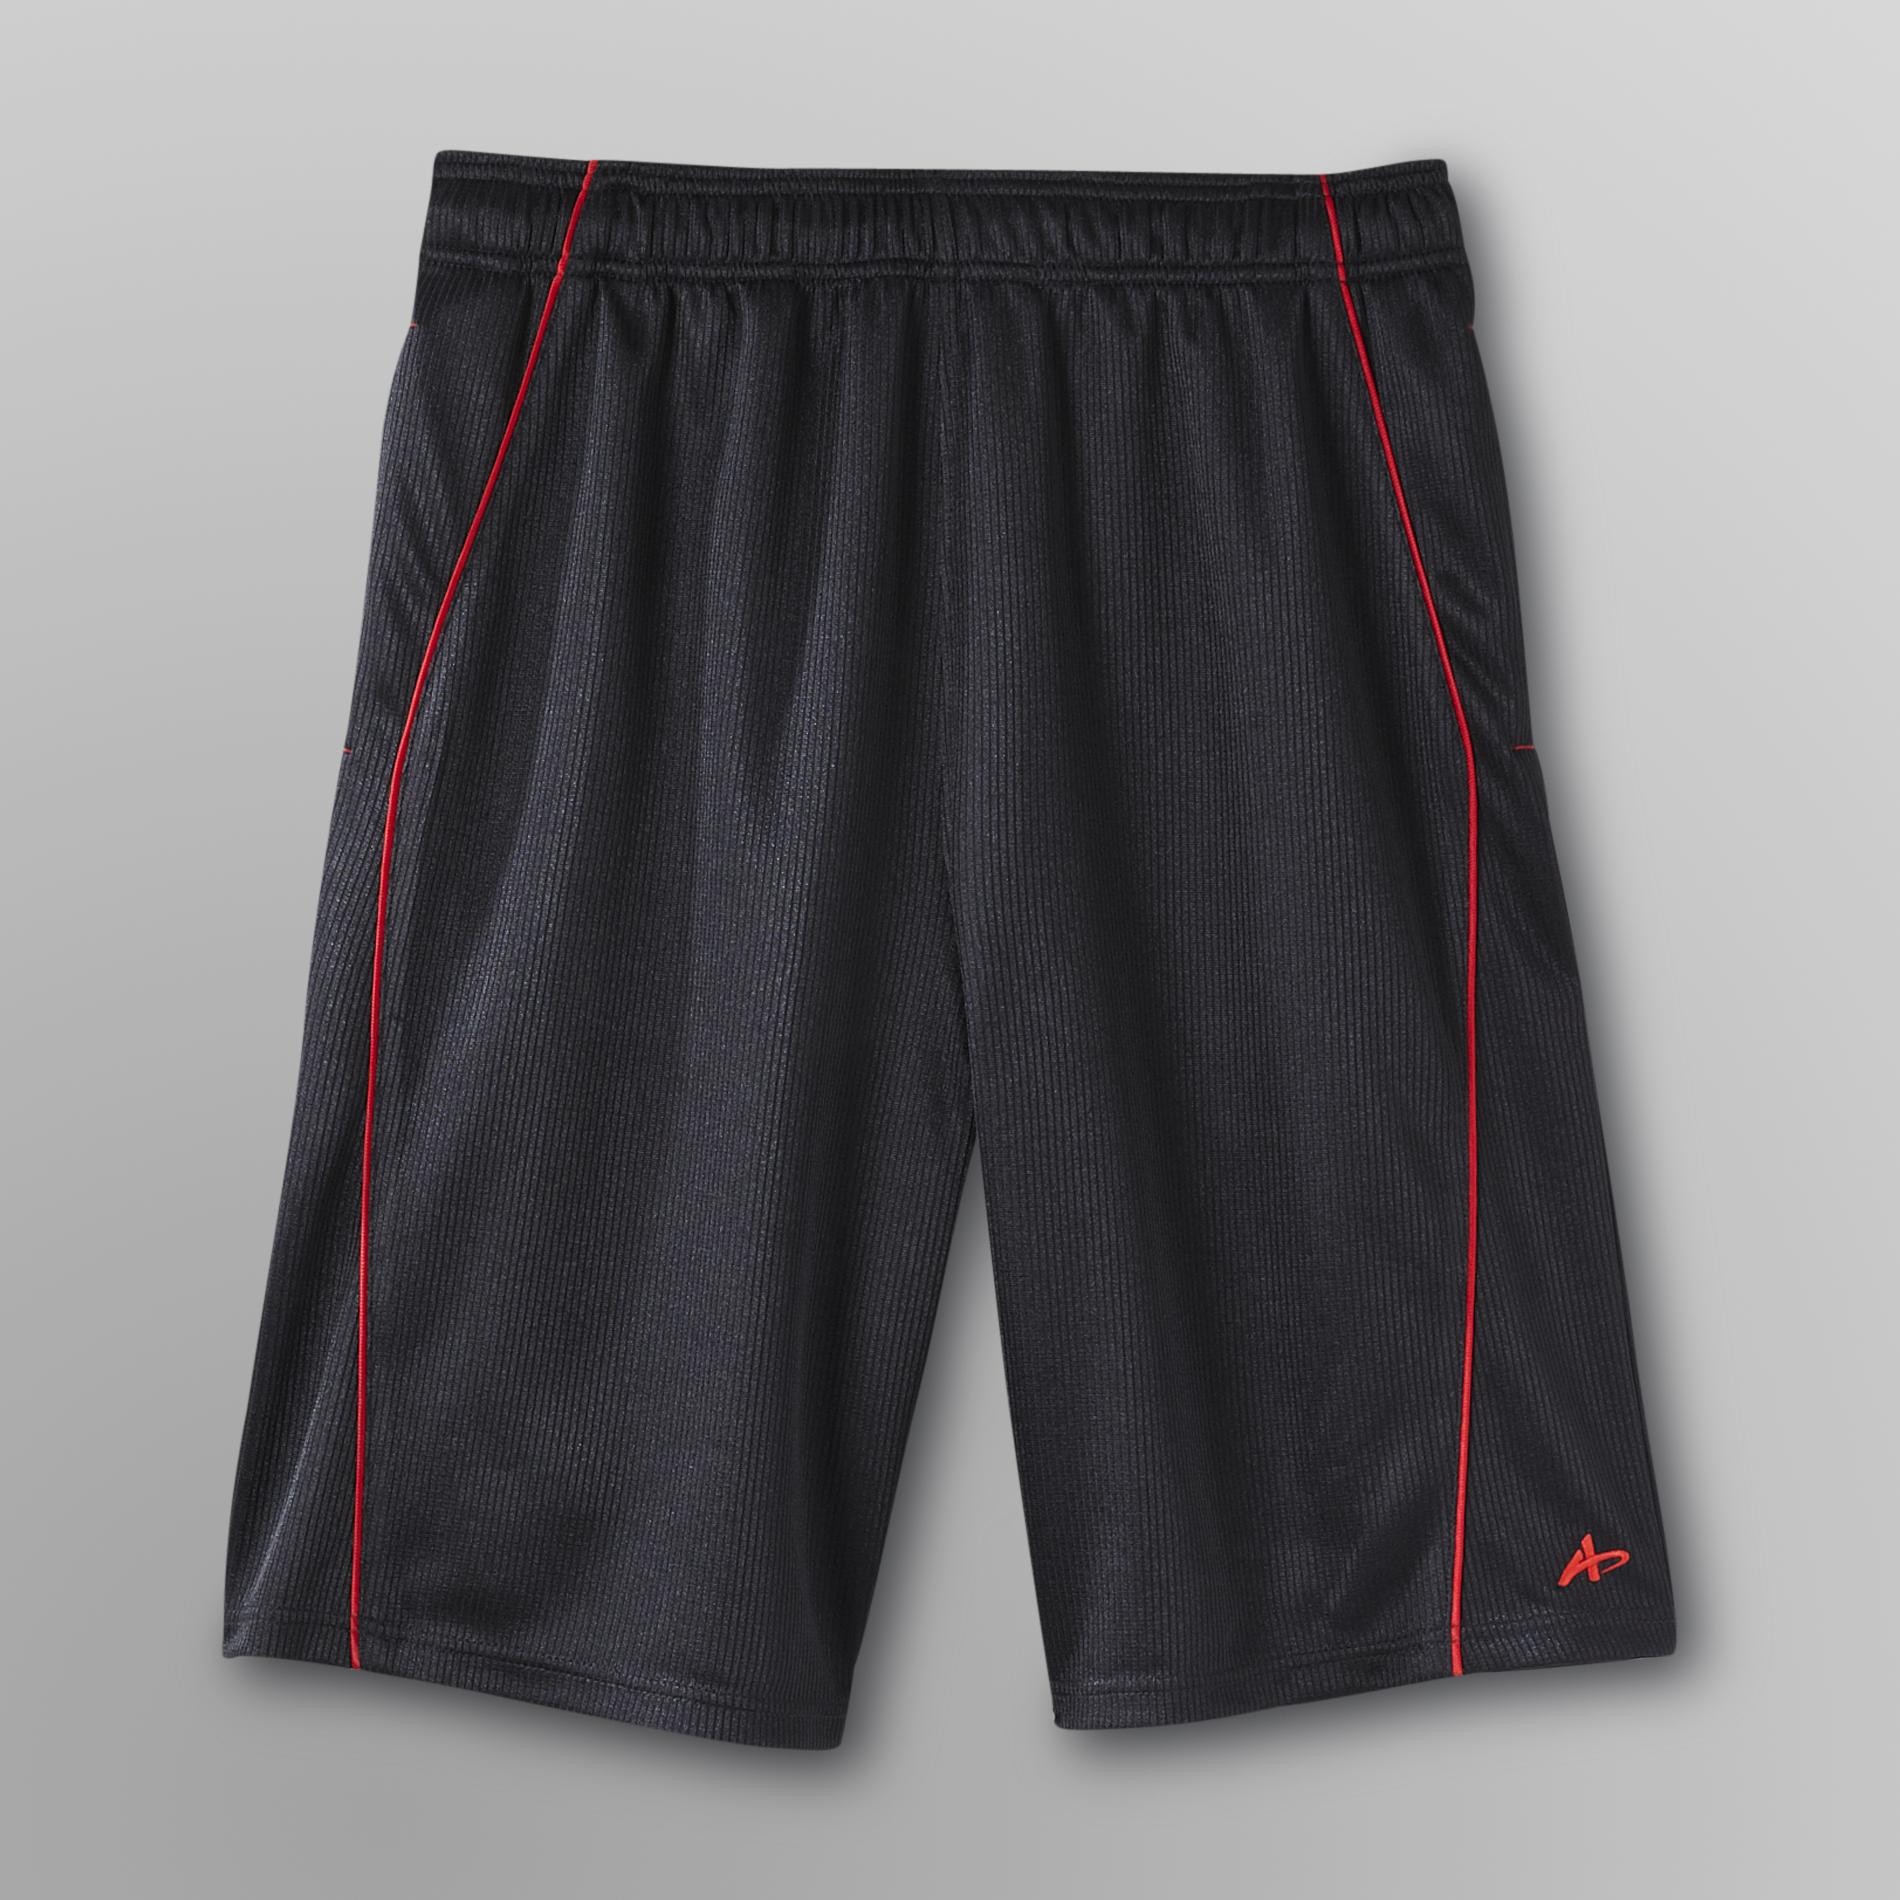 Athletech Men's Basketball Shorts - Pinstripes